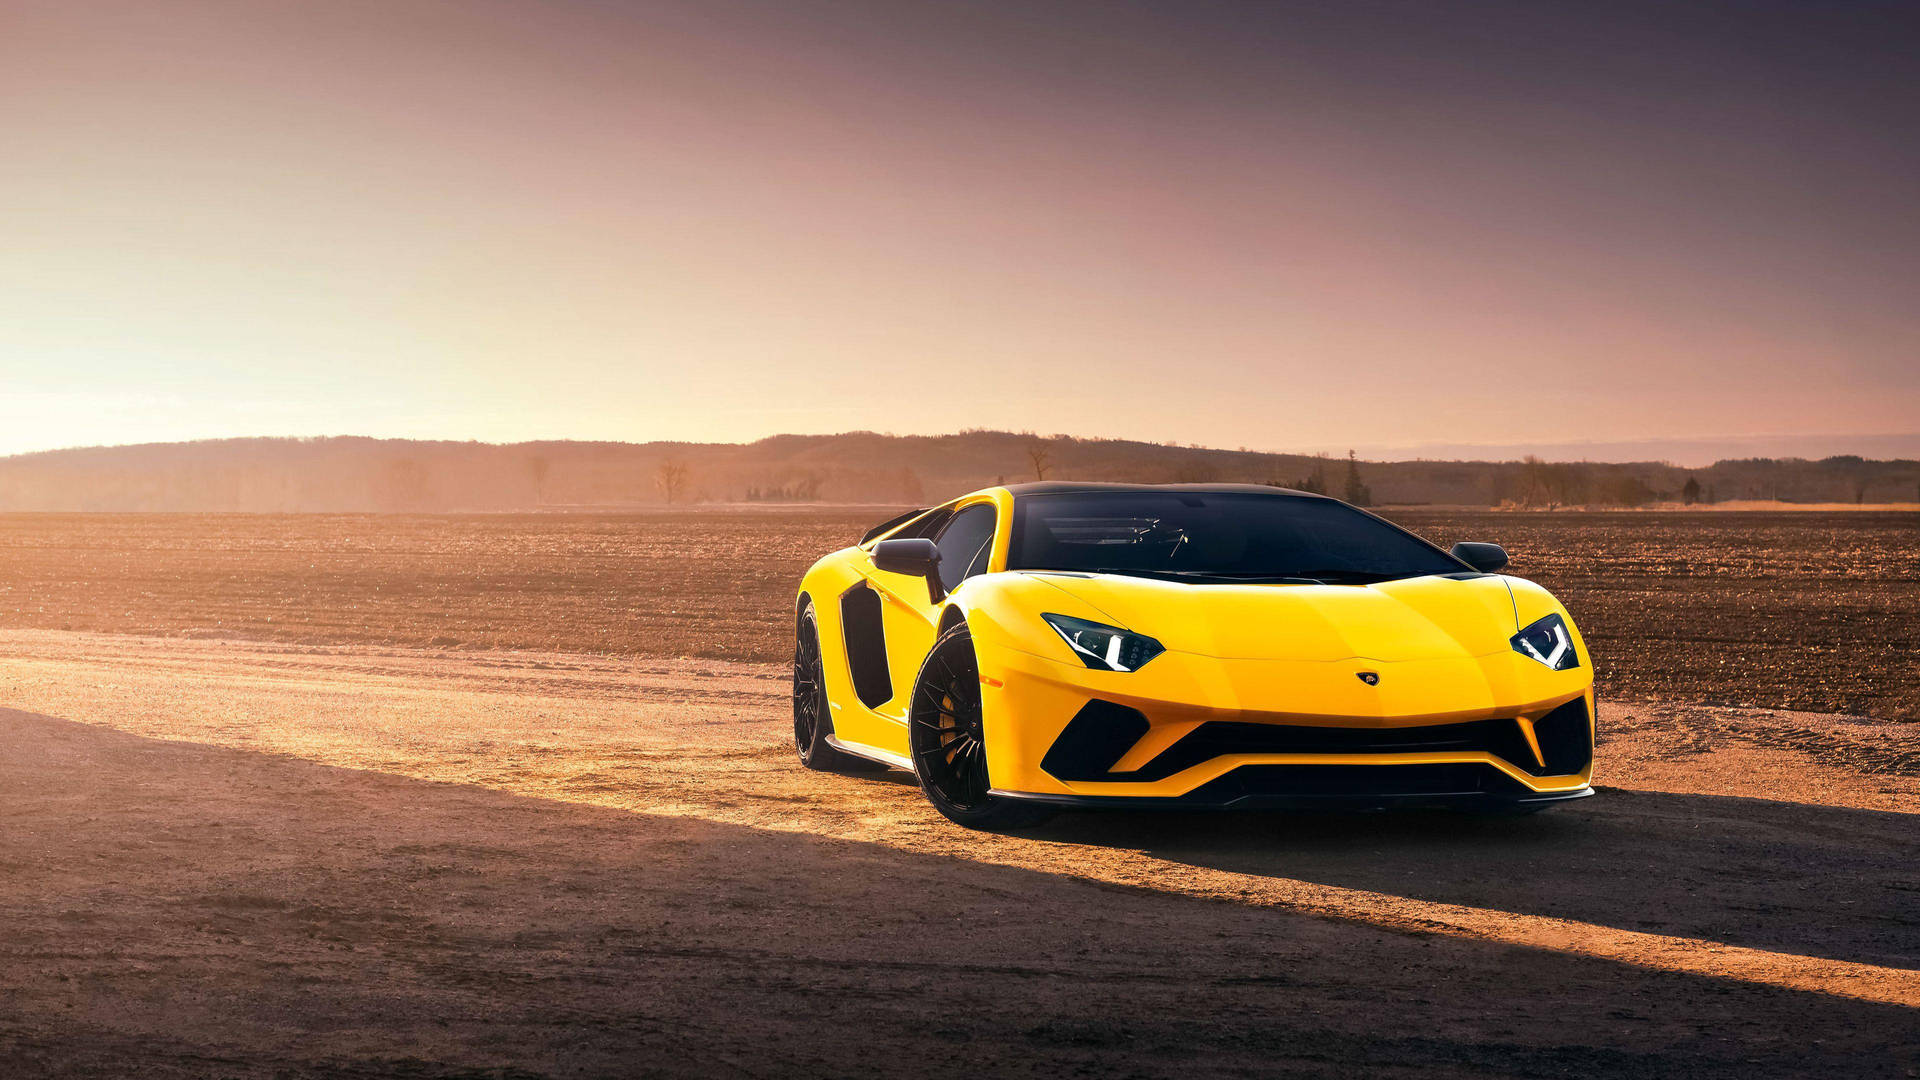 4k Yellow Luxury Car In Desert Background